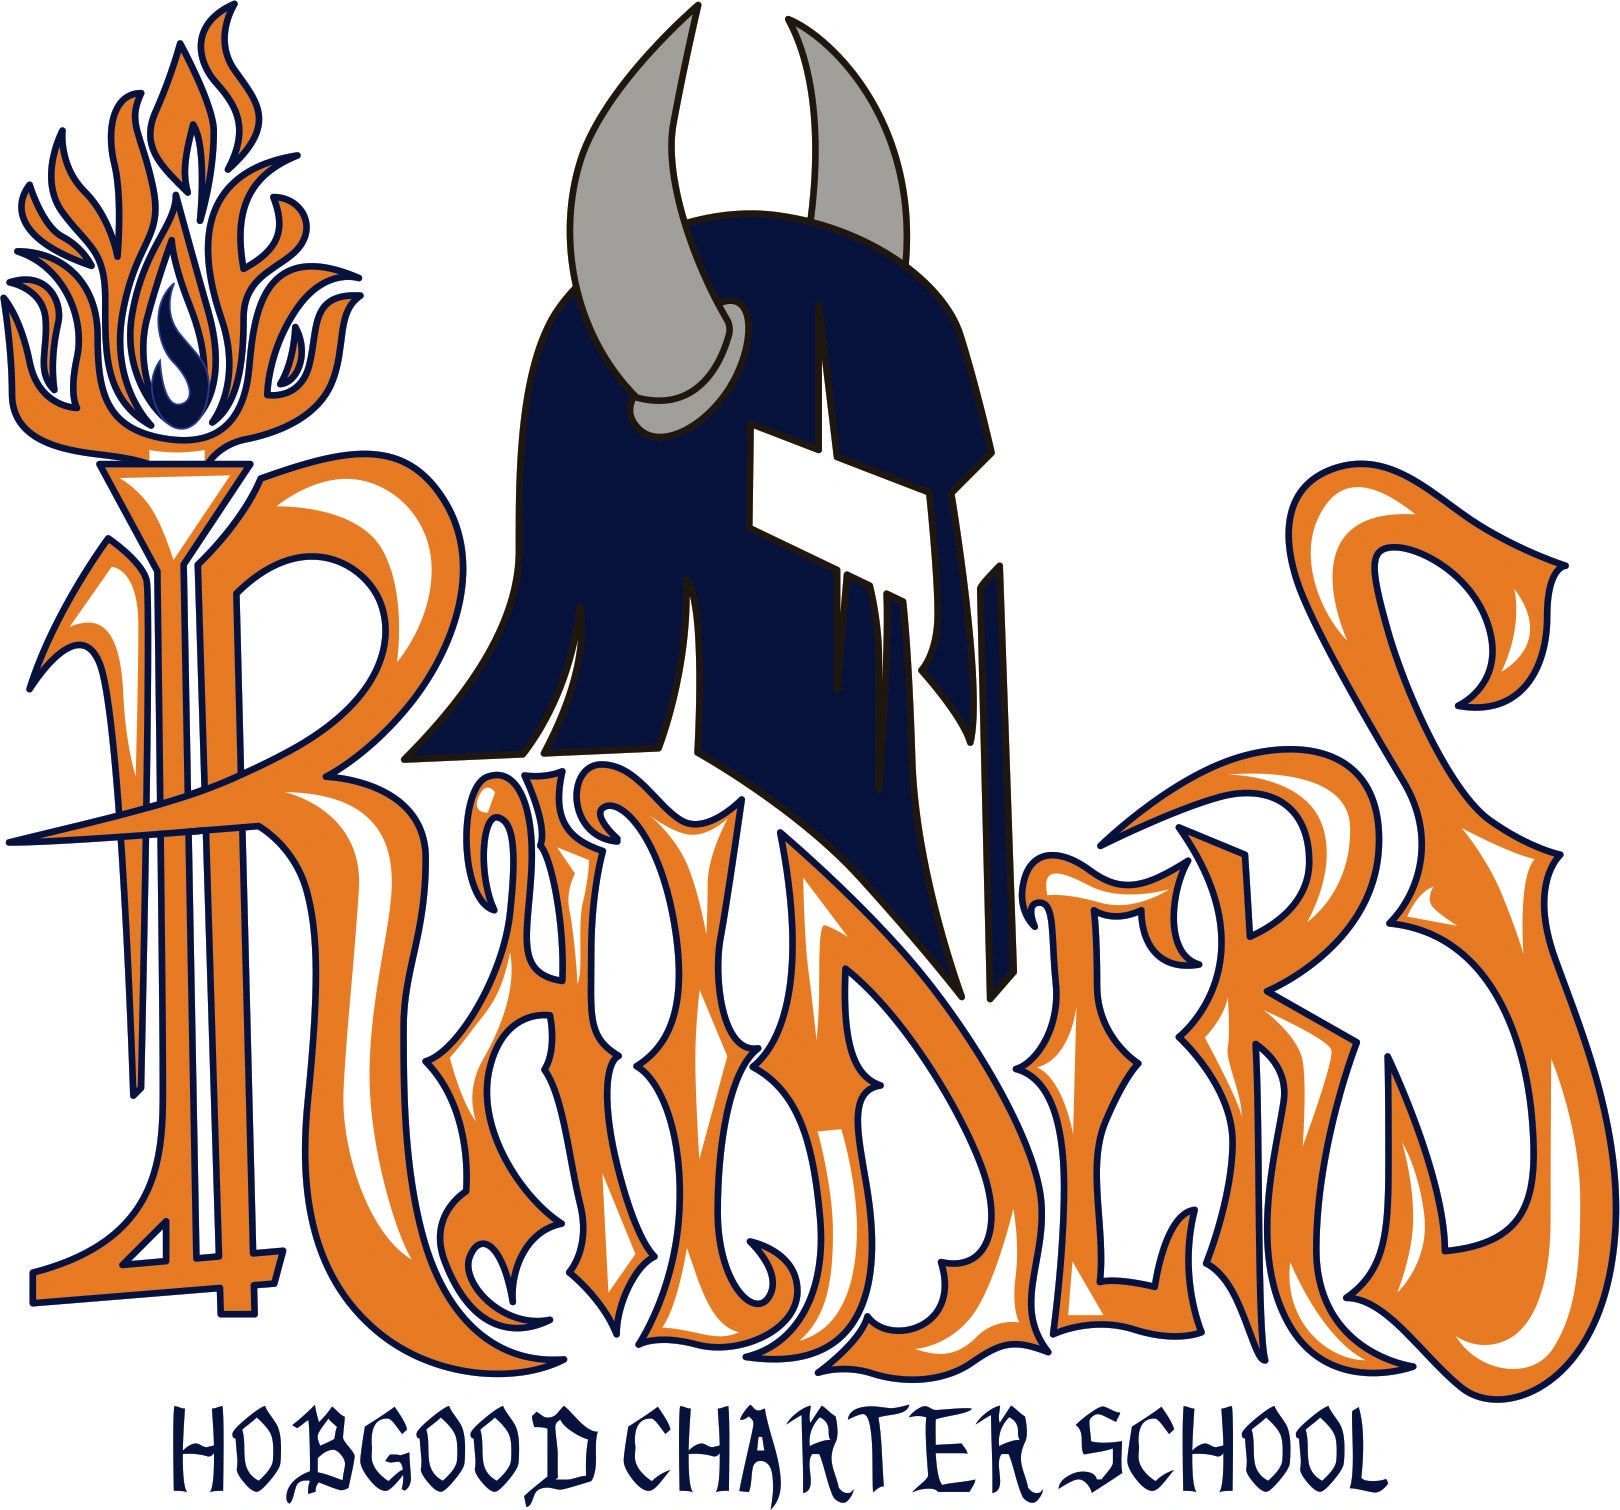 Hobgood Charter School Public School, Education